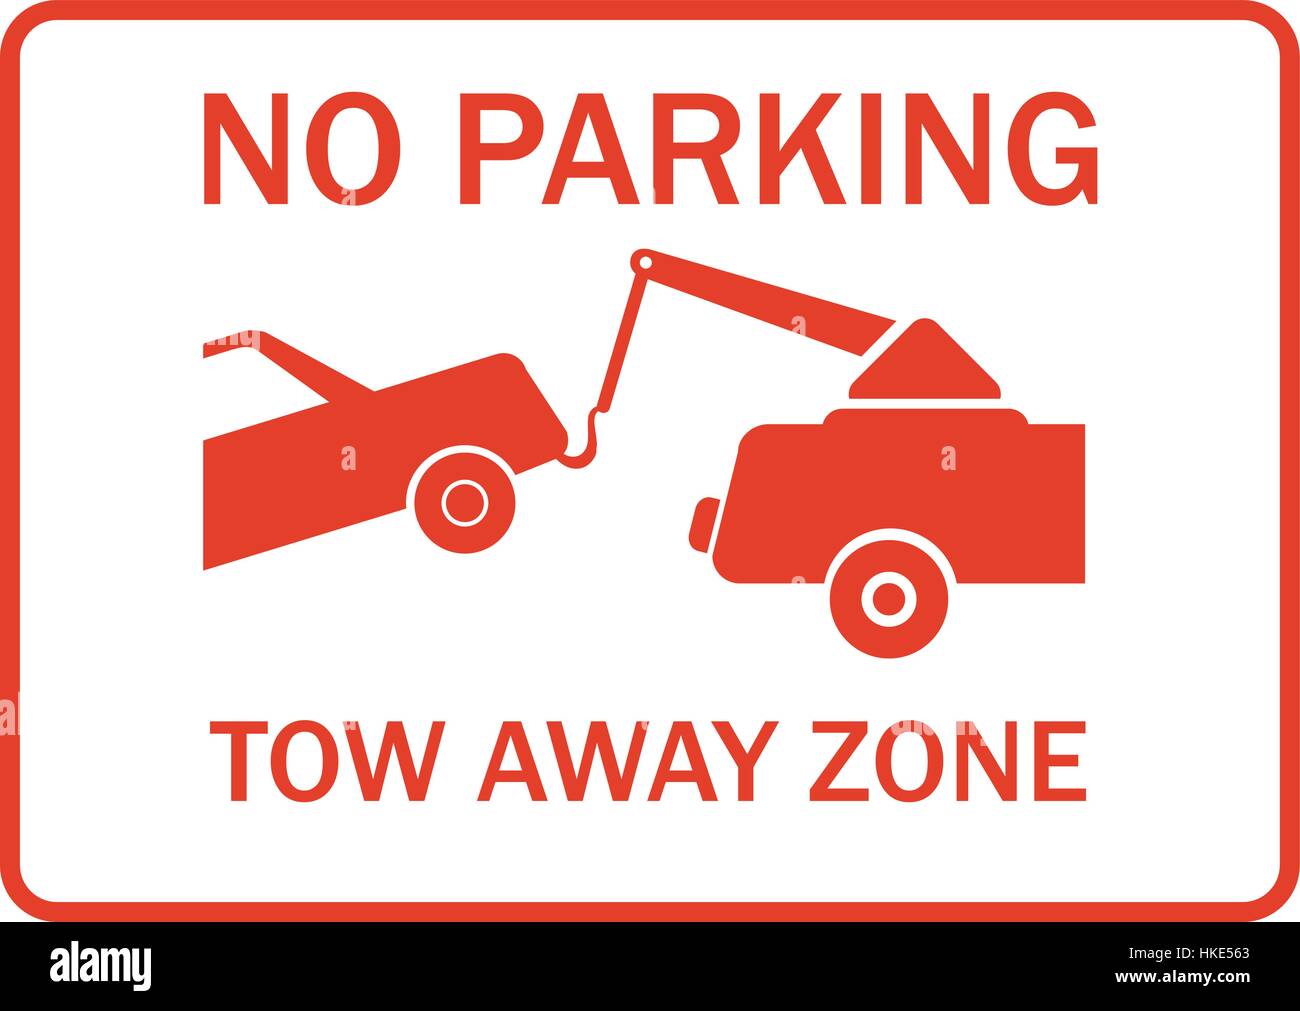 No Parking. Tow away zone. Stock Vector